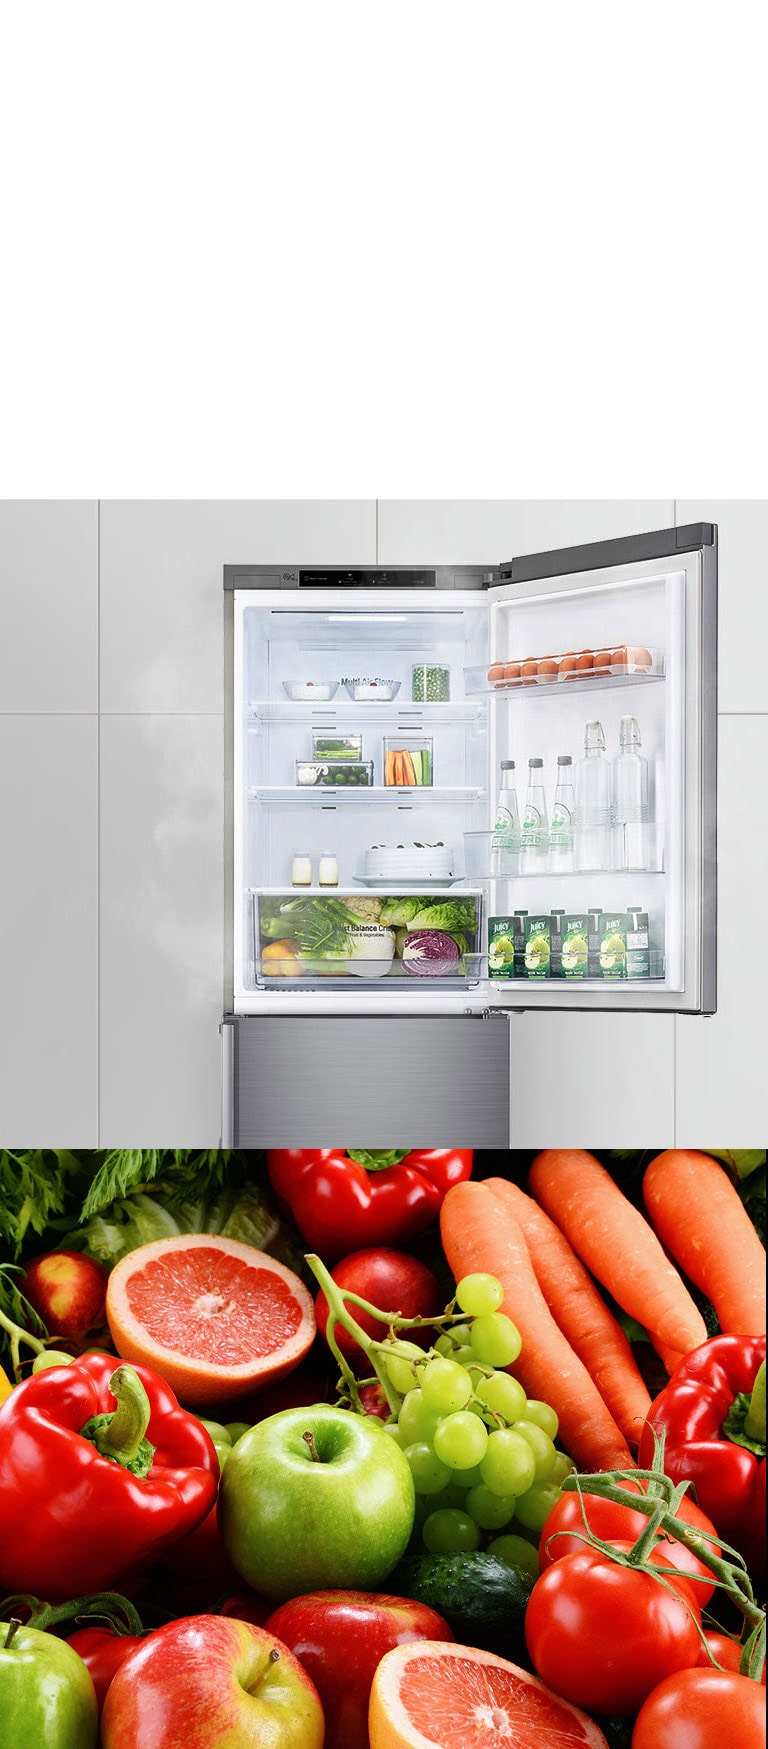 Prva slika prikazuje frižider sa otvorenim gornjim vratima, pun pića i hrane. Druga slika prikazuje prelepo sveže voće i povrće u grupi.